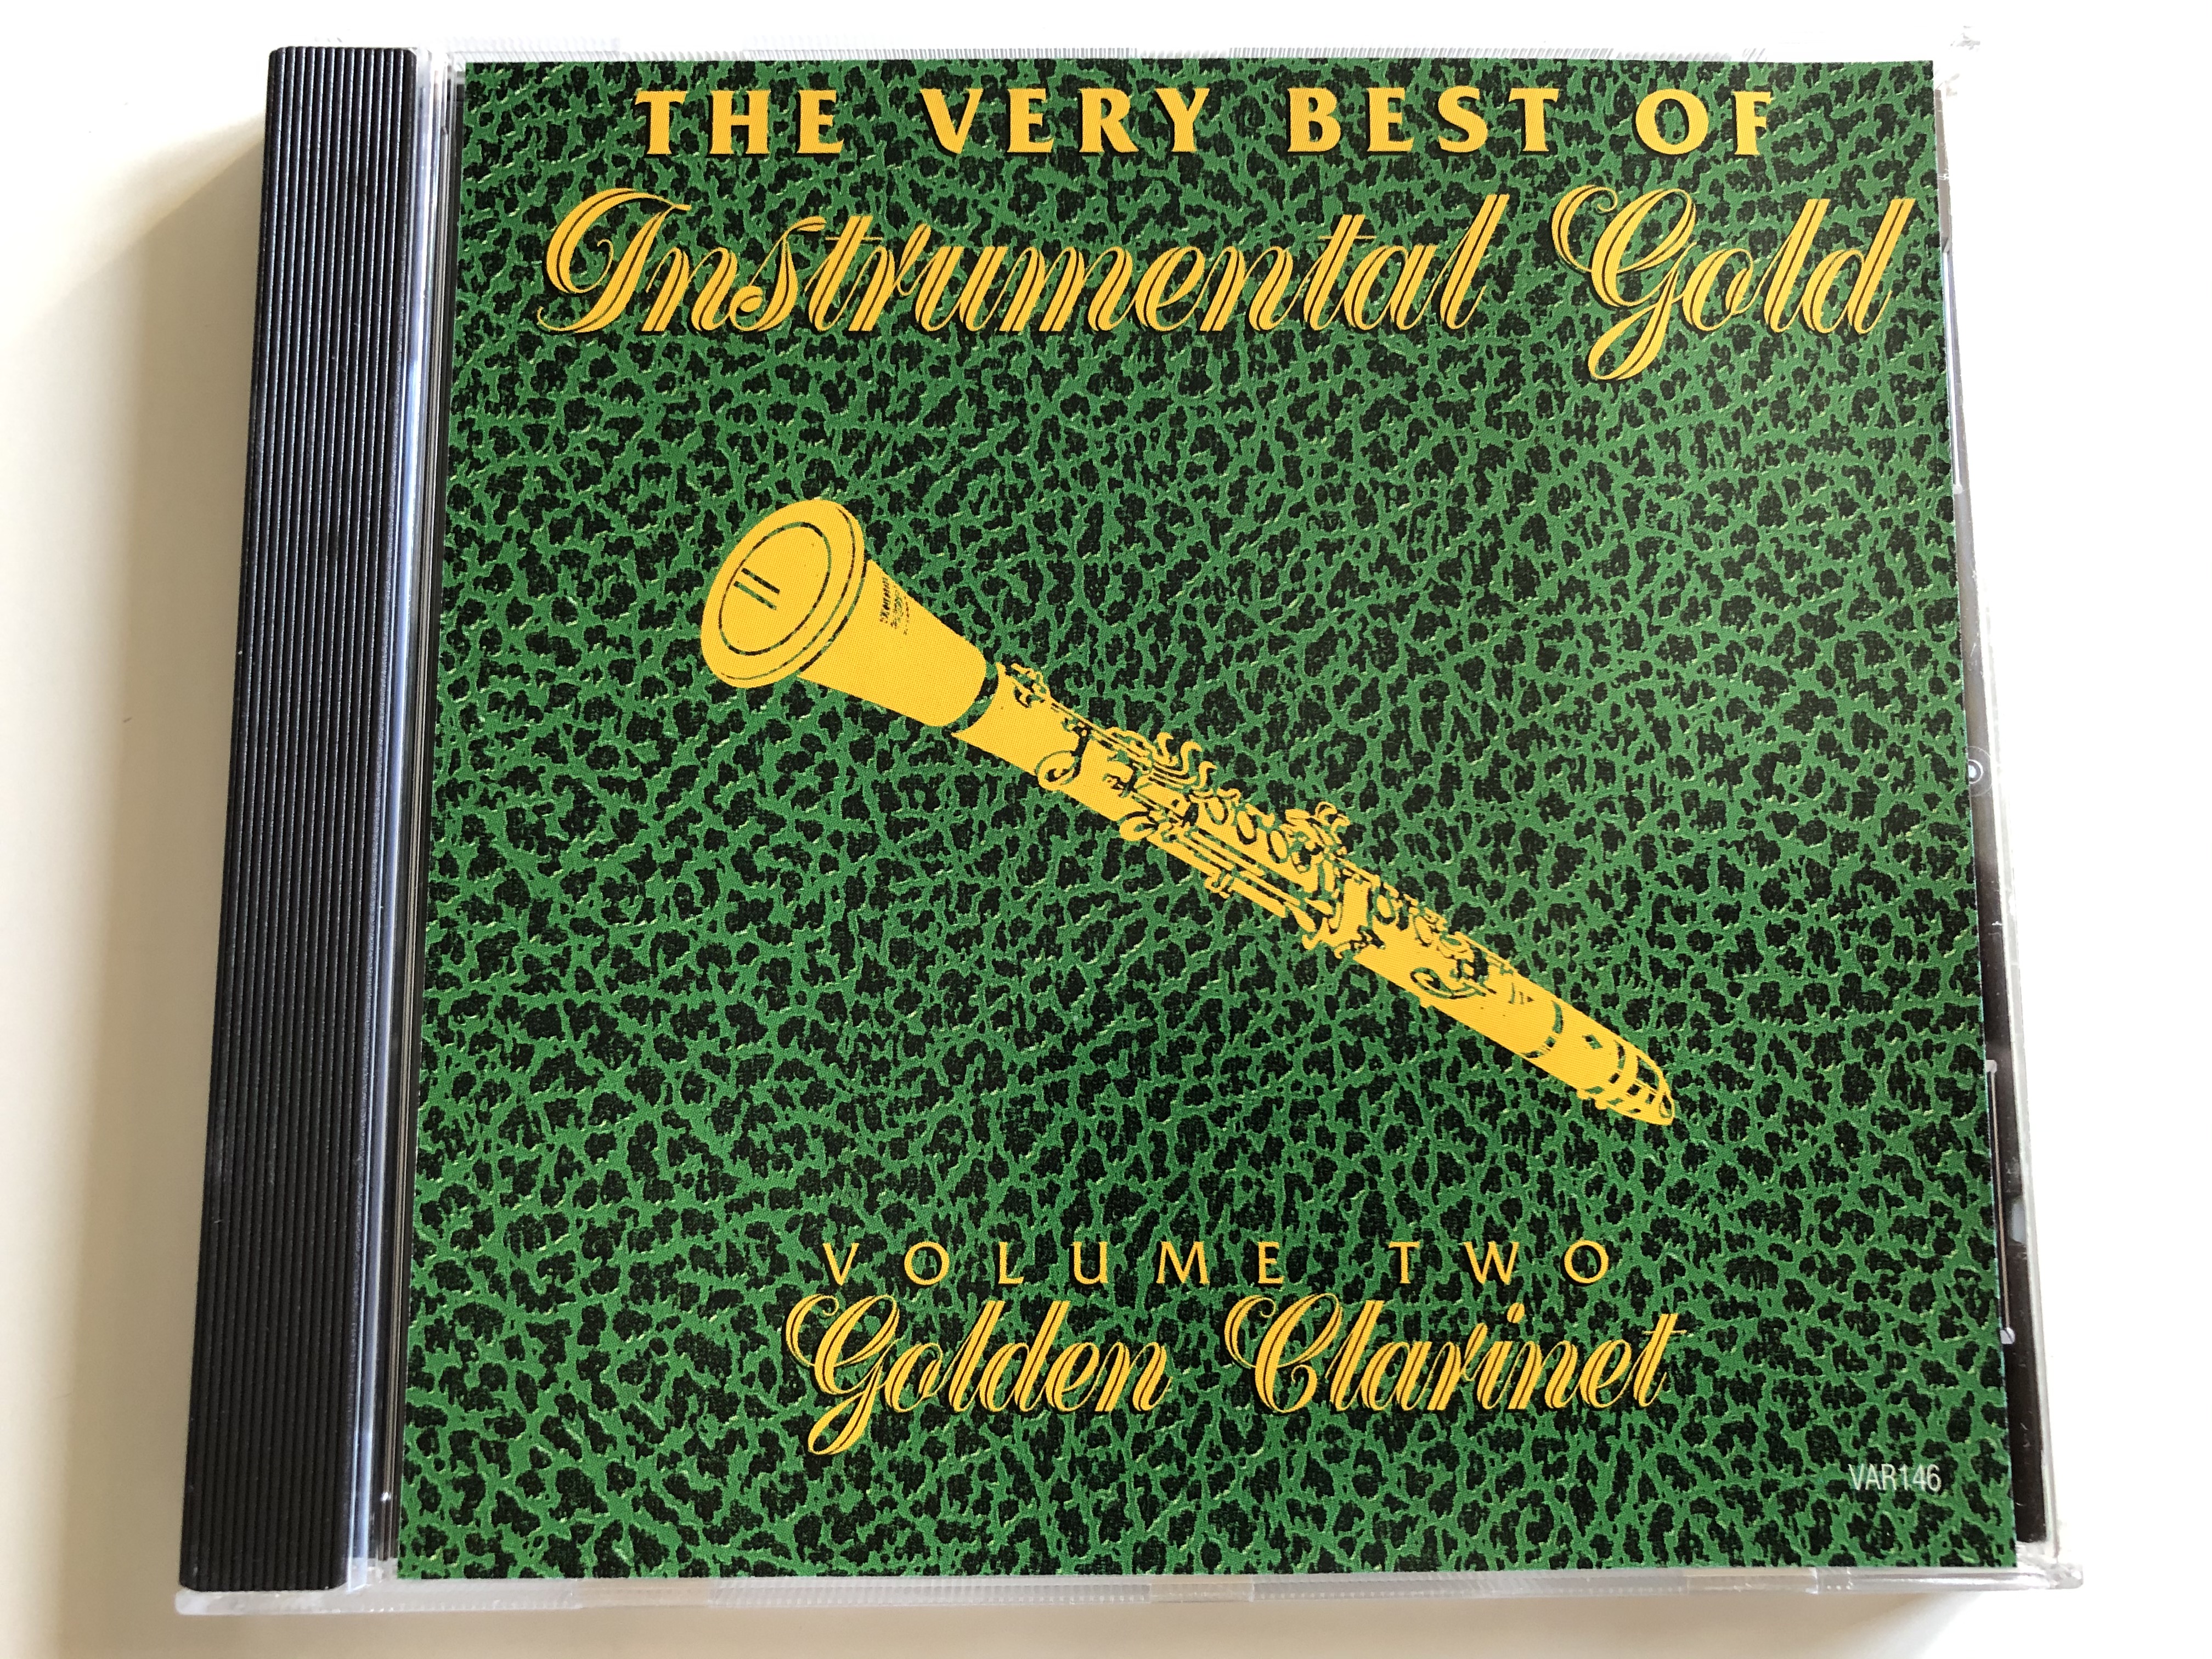 the-very-best-of-instrumental-gold-volume-two-golden-clarinet-tring-audio-cd-var146-1-.jpg